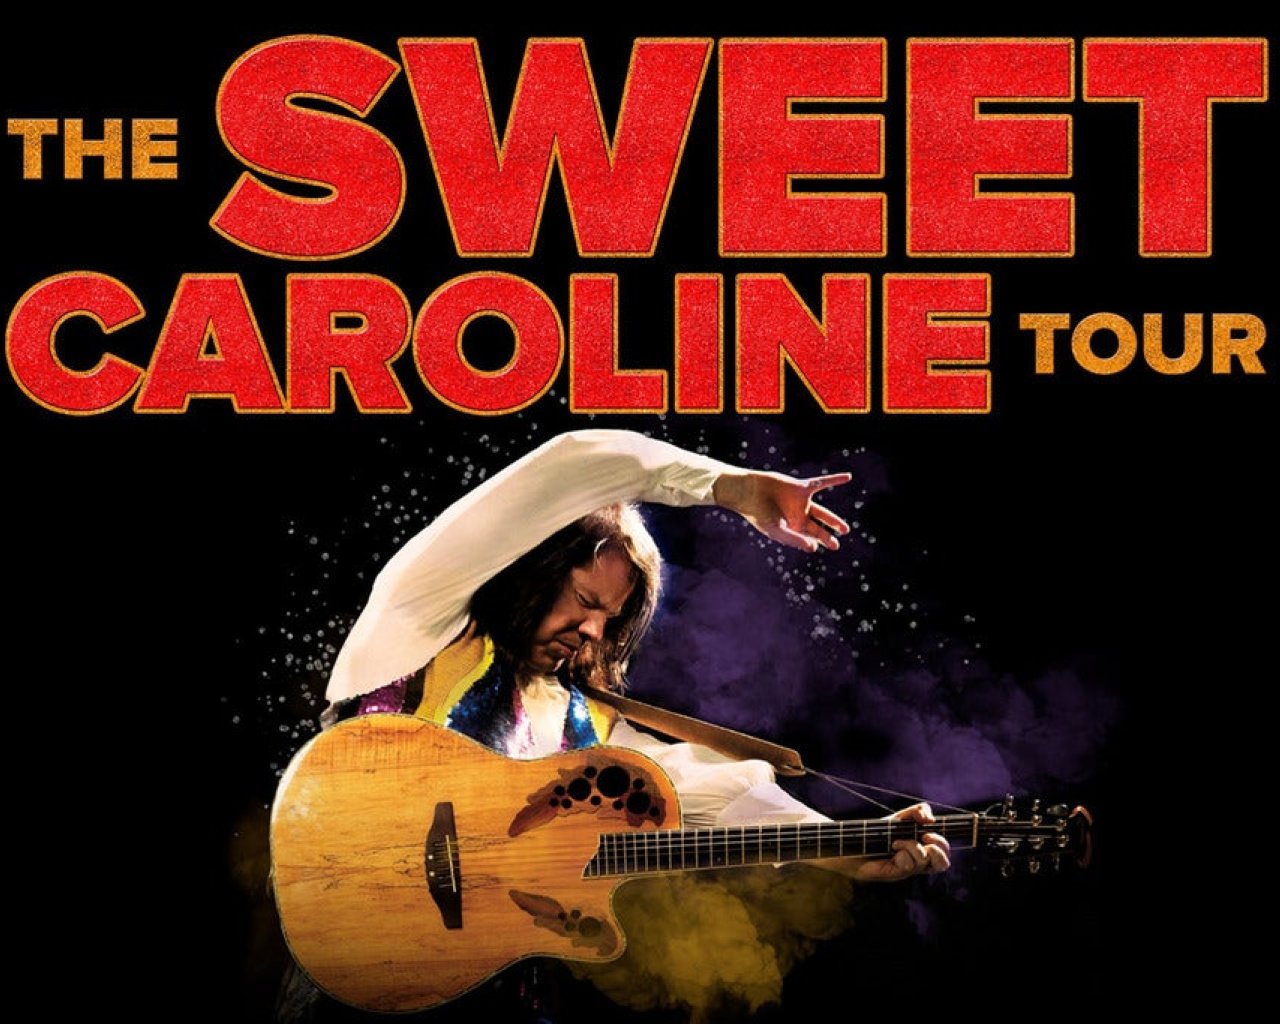 The Sweet Caroline Tour: A Tribute to Neil Diamond